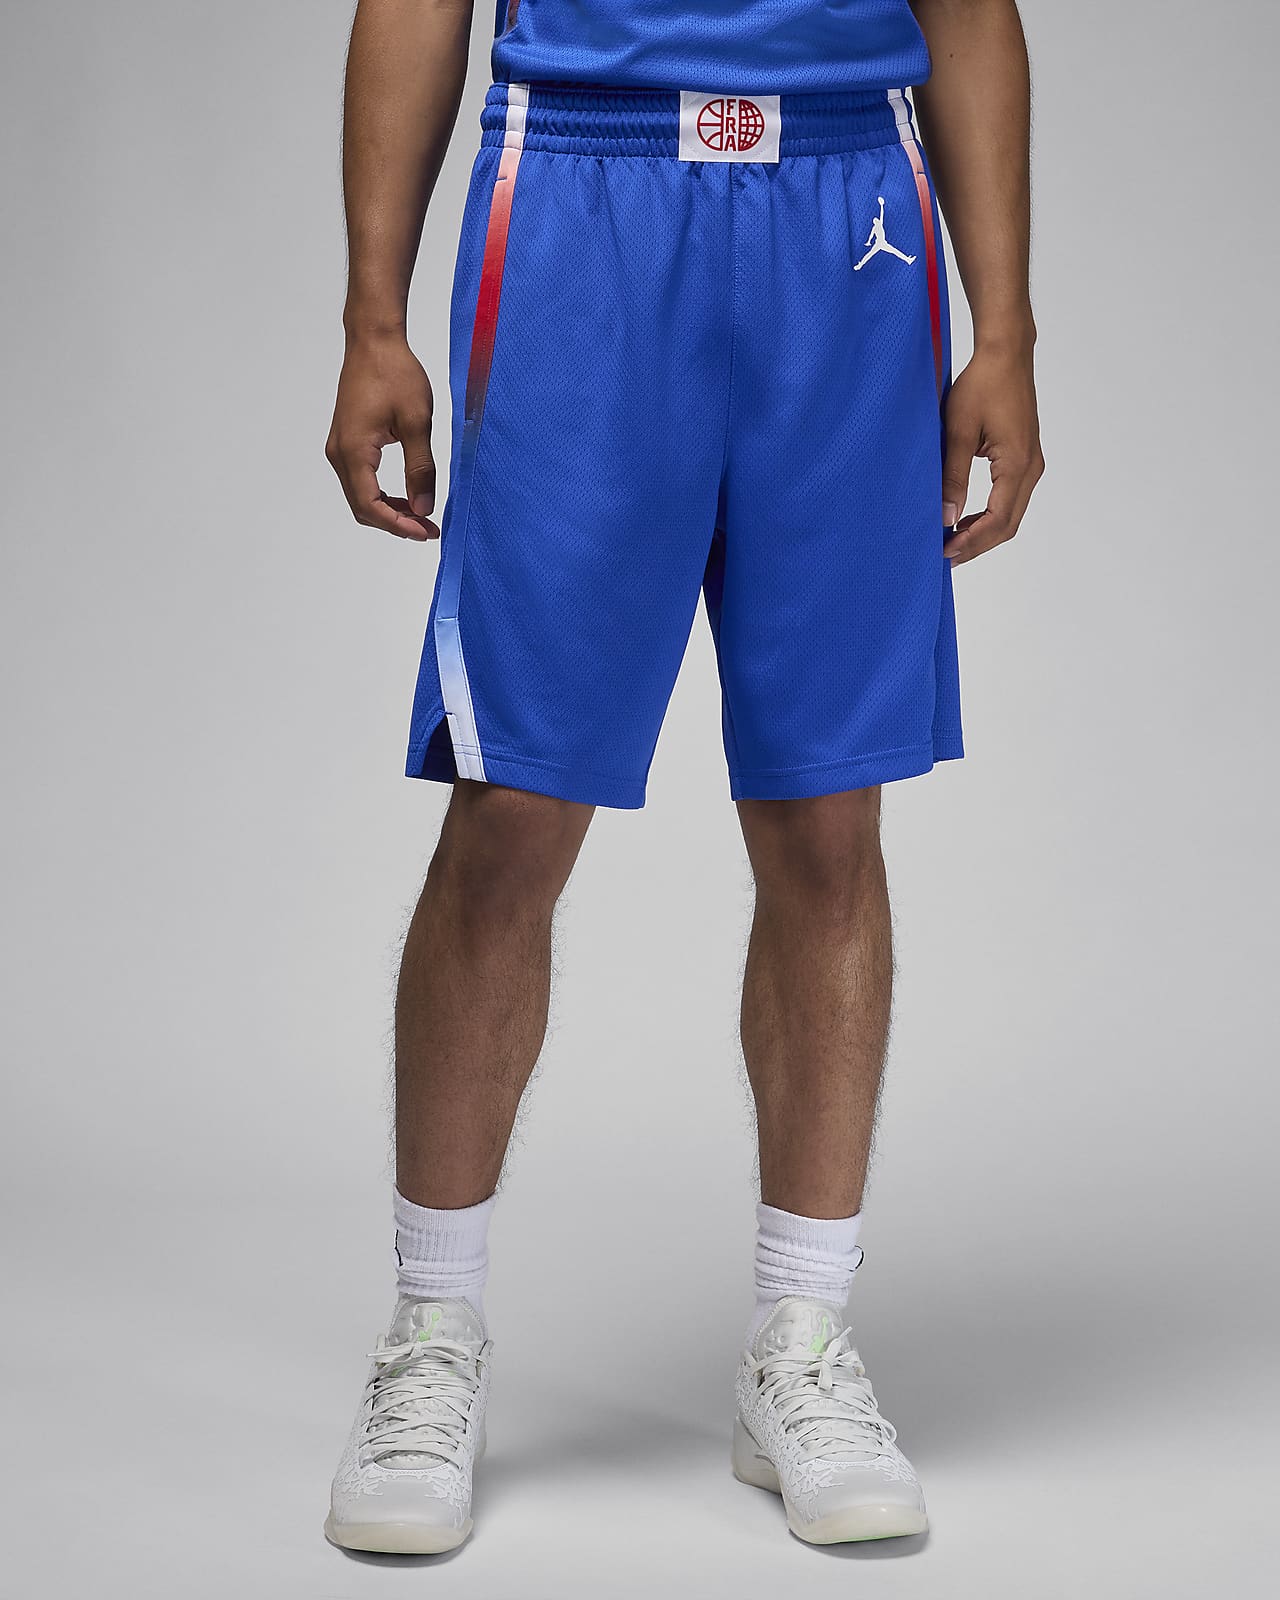 France Limited Road Men's Nike Basketball Shorts